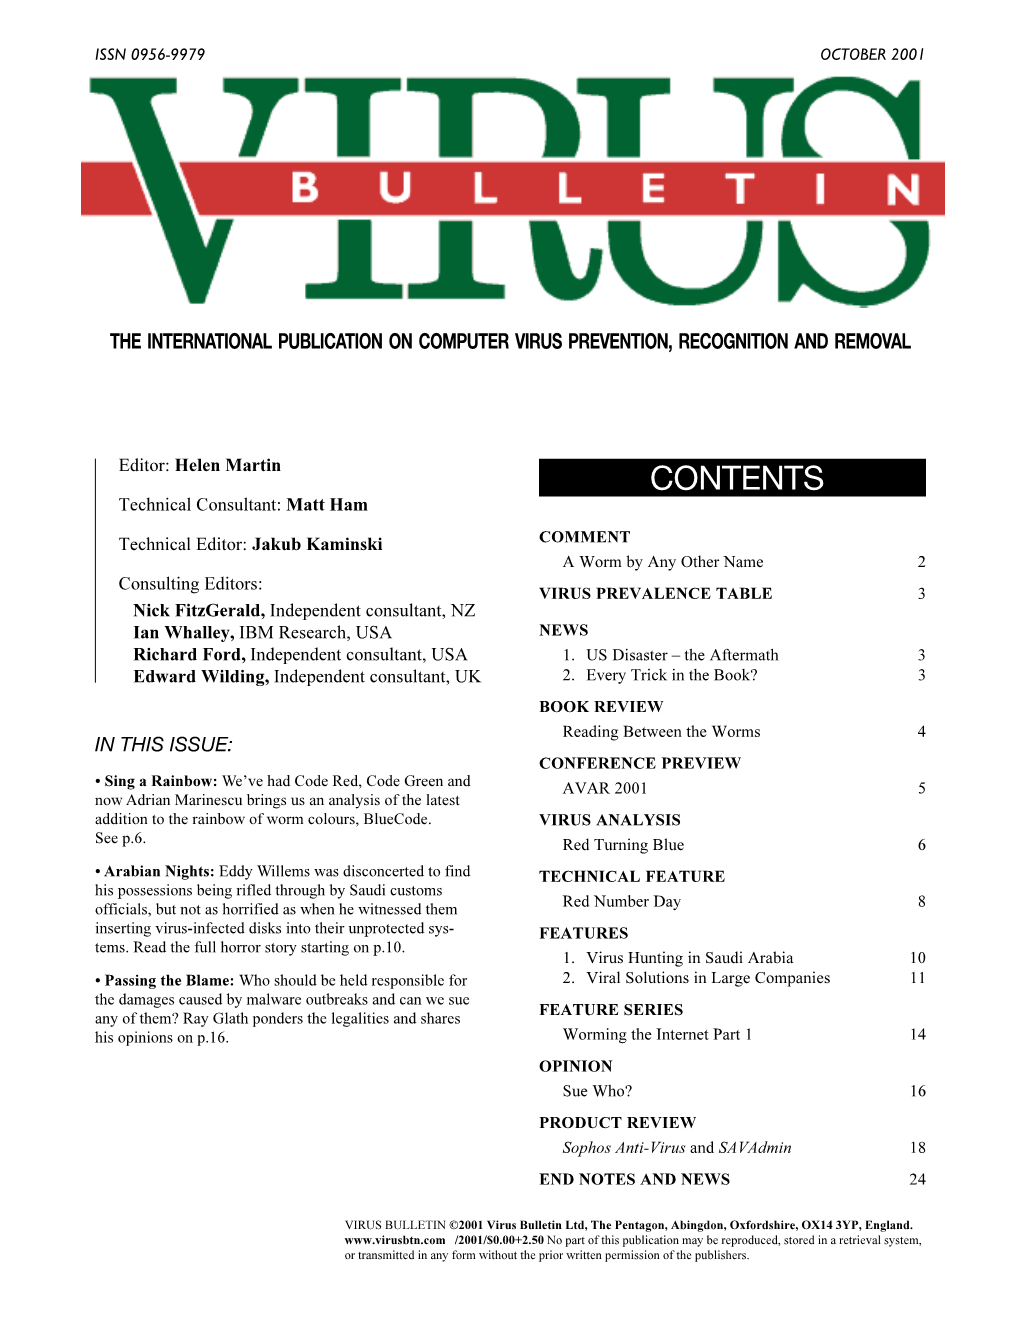 Virus Bulletin, October 2001